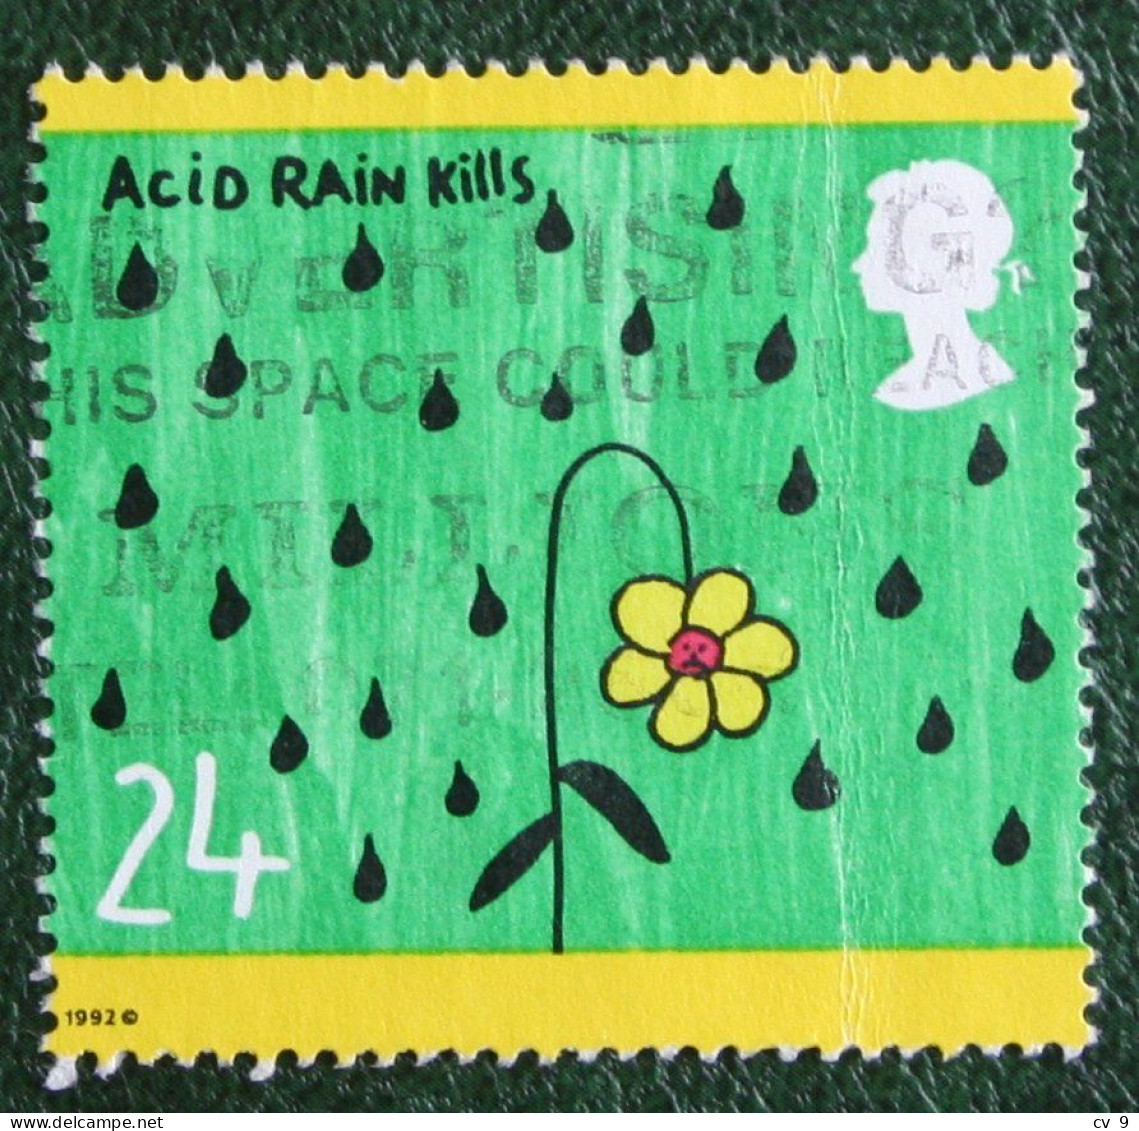 Acid Rains Kills Children Mi 1414 Yv 1633 SG 1629 1992 Used/gebruikt/oblitere ENGLAND GRANDE-BRETAGNE GB GREAT BRITAIN - Oblitérés